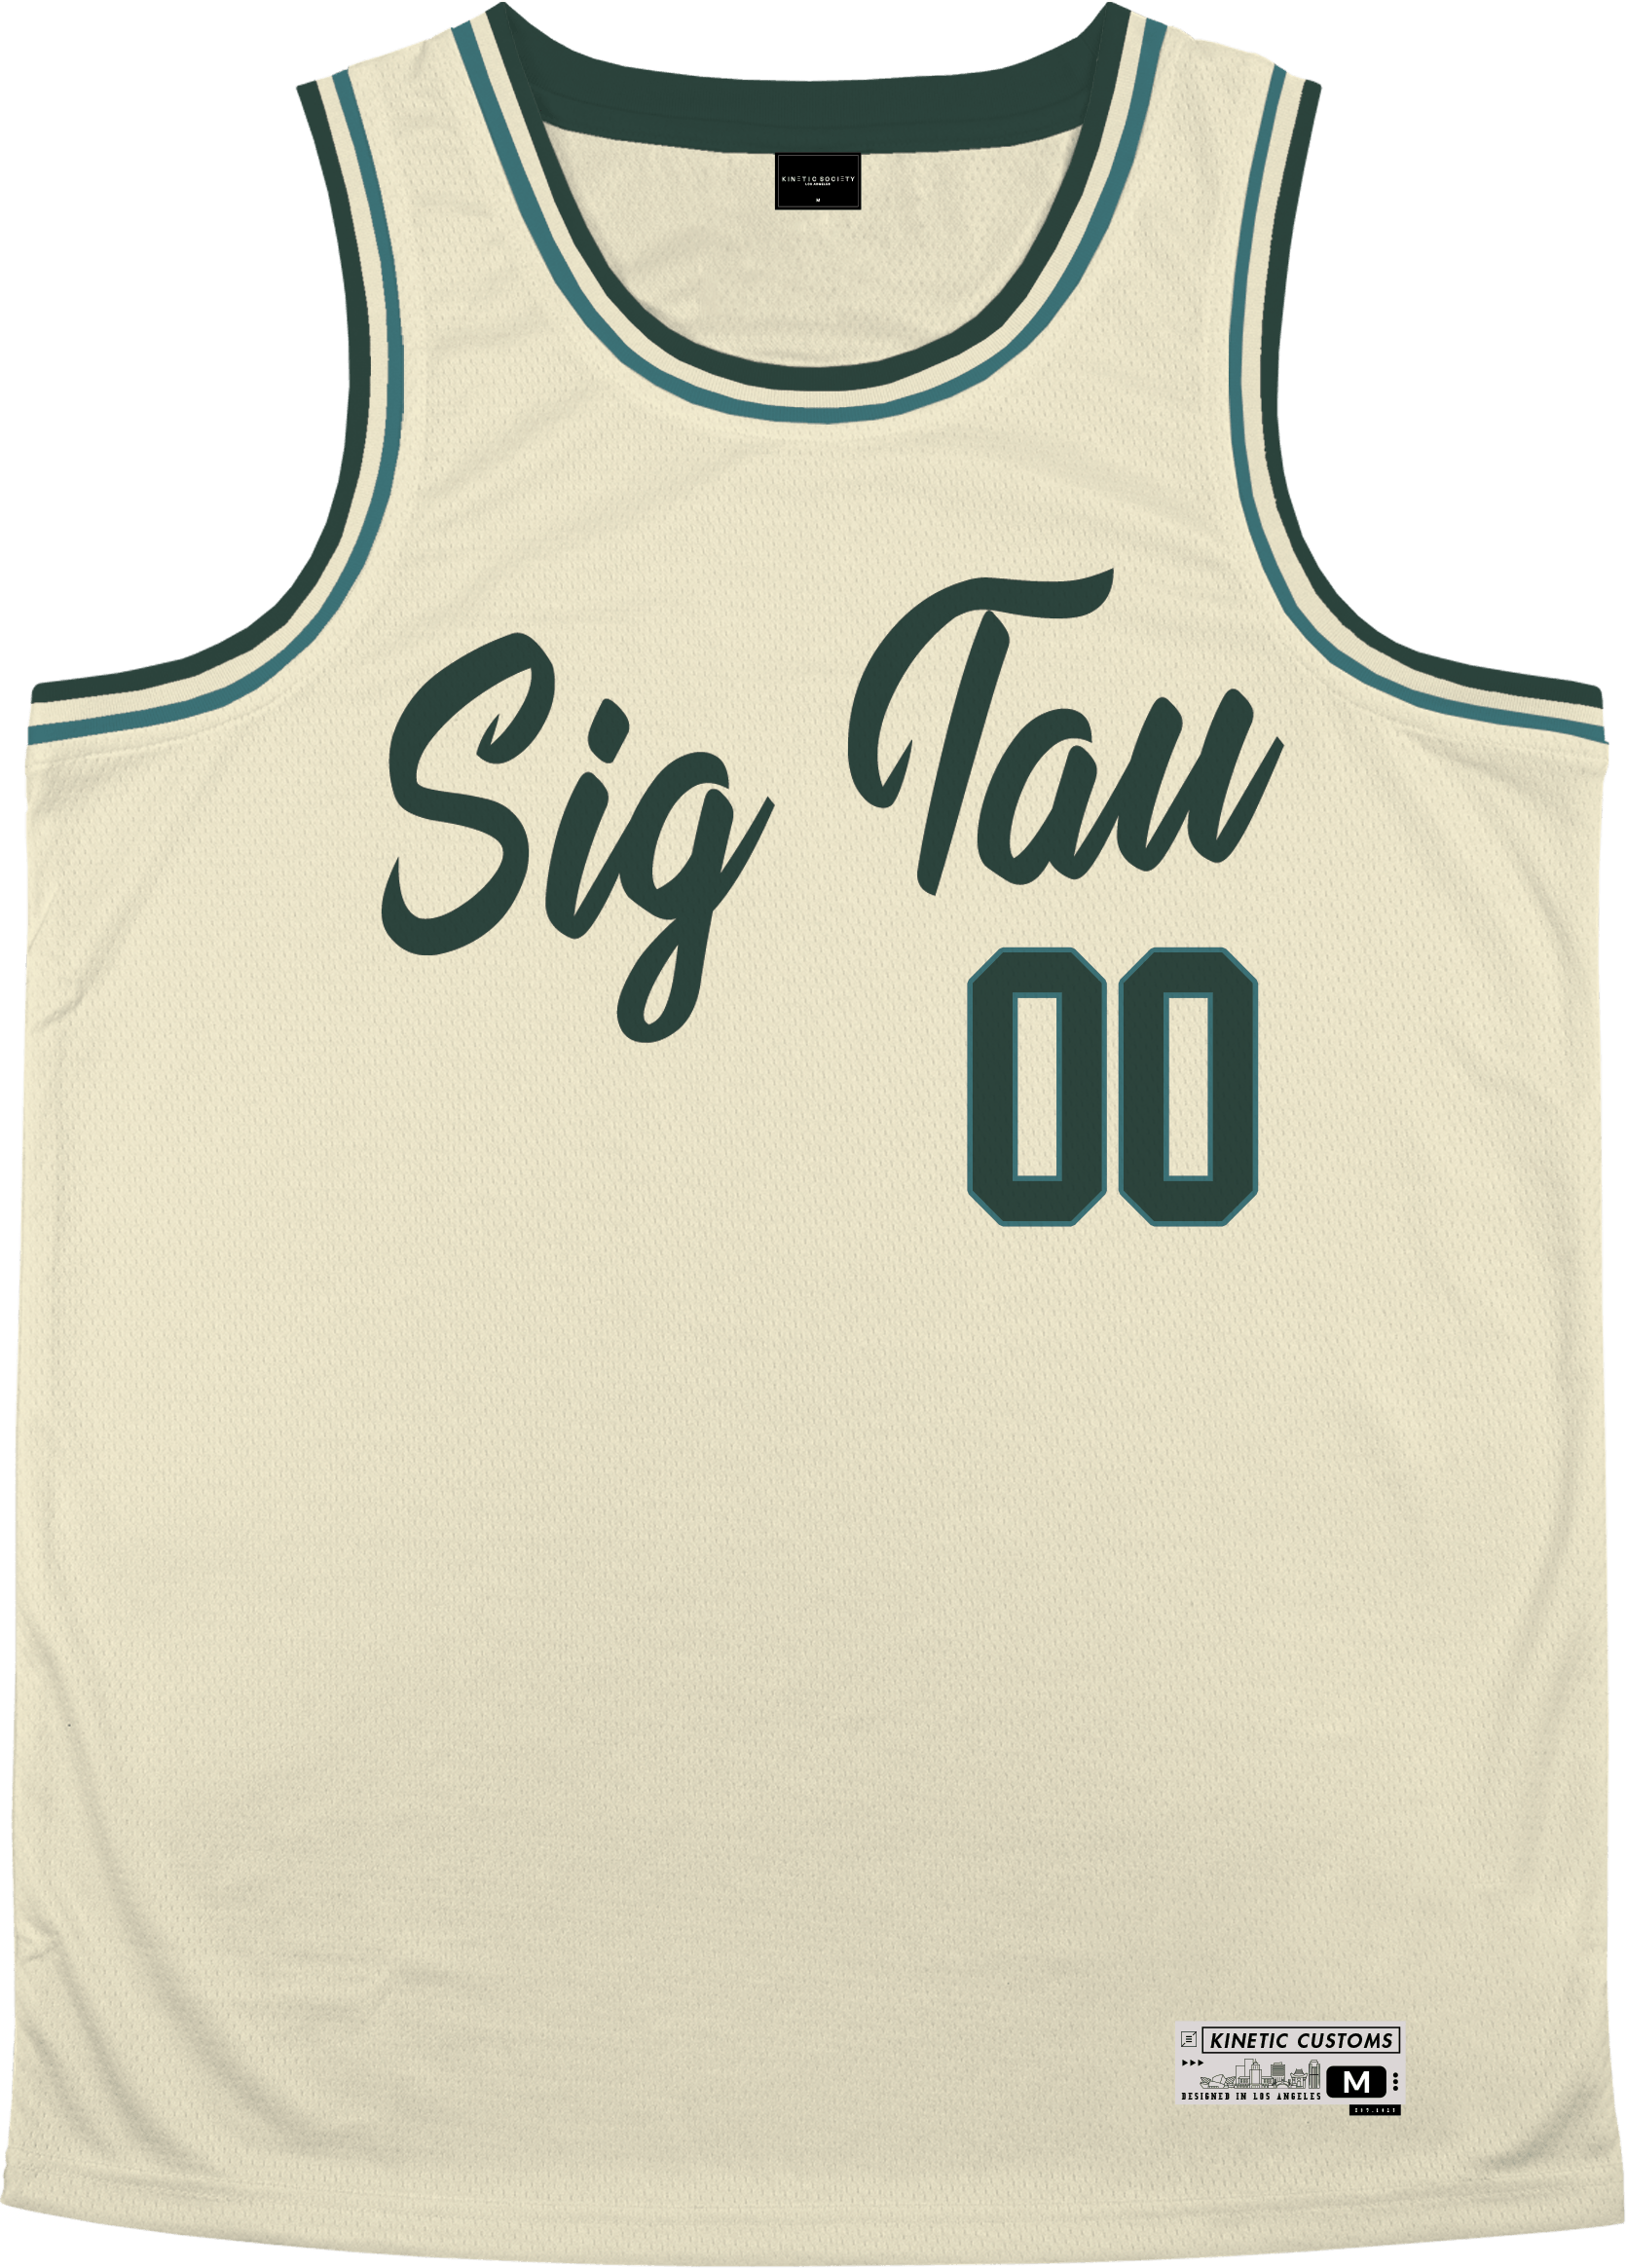 Sigma Tau Gamma - Buttercream Basketball Jersey - Kinetic Society